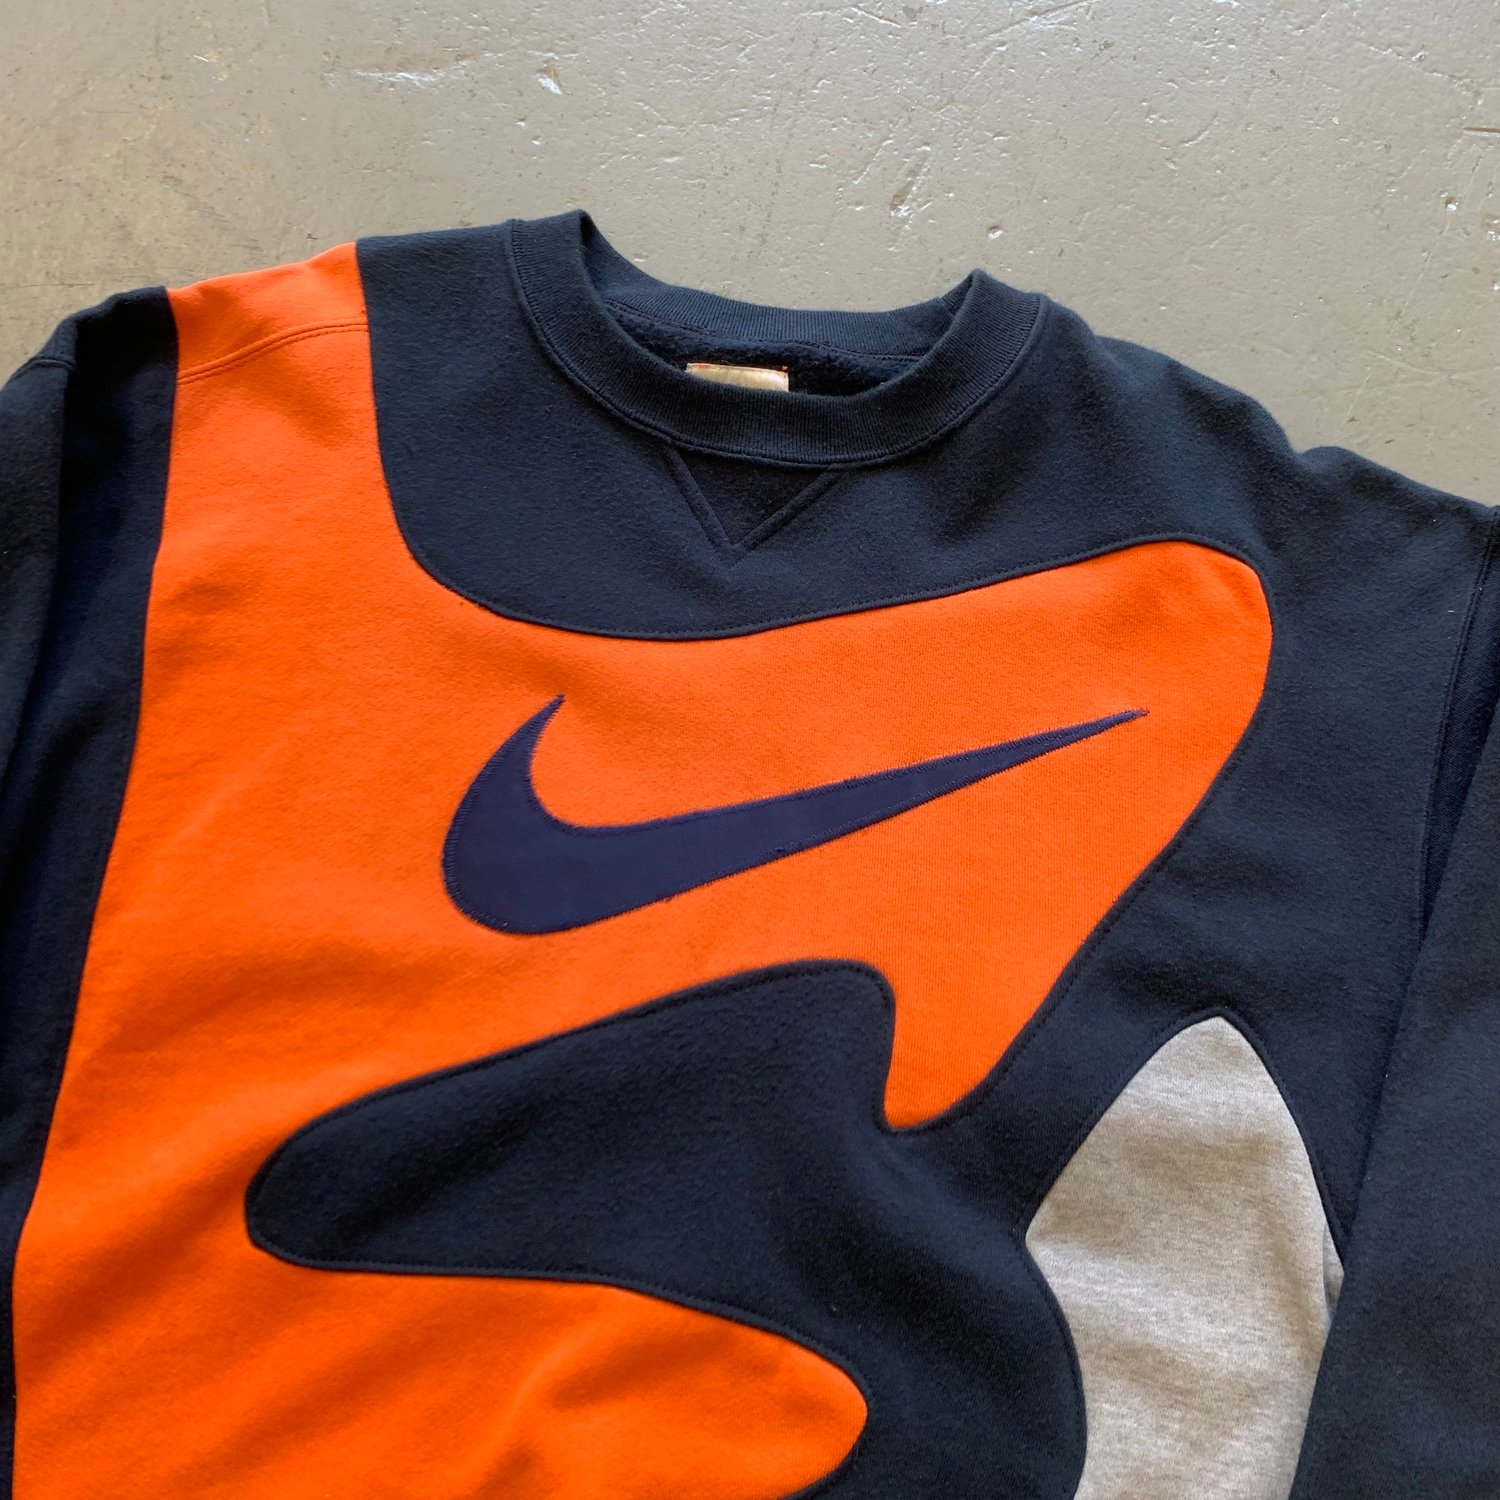 Image of 90s Nike rework big swoosh sweatshirt size xl 